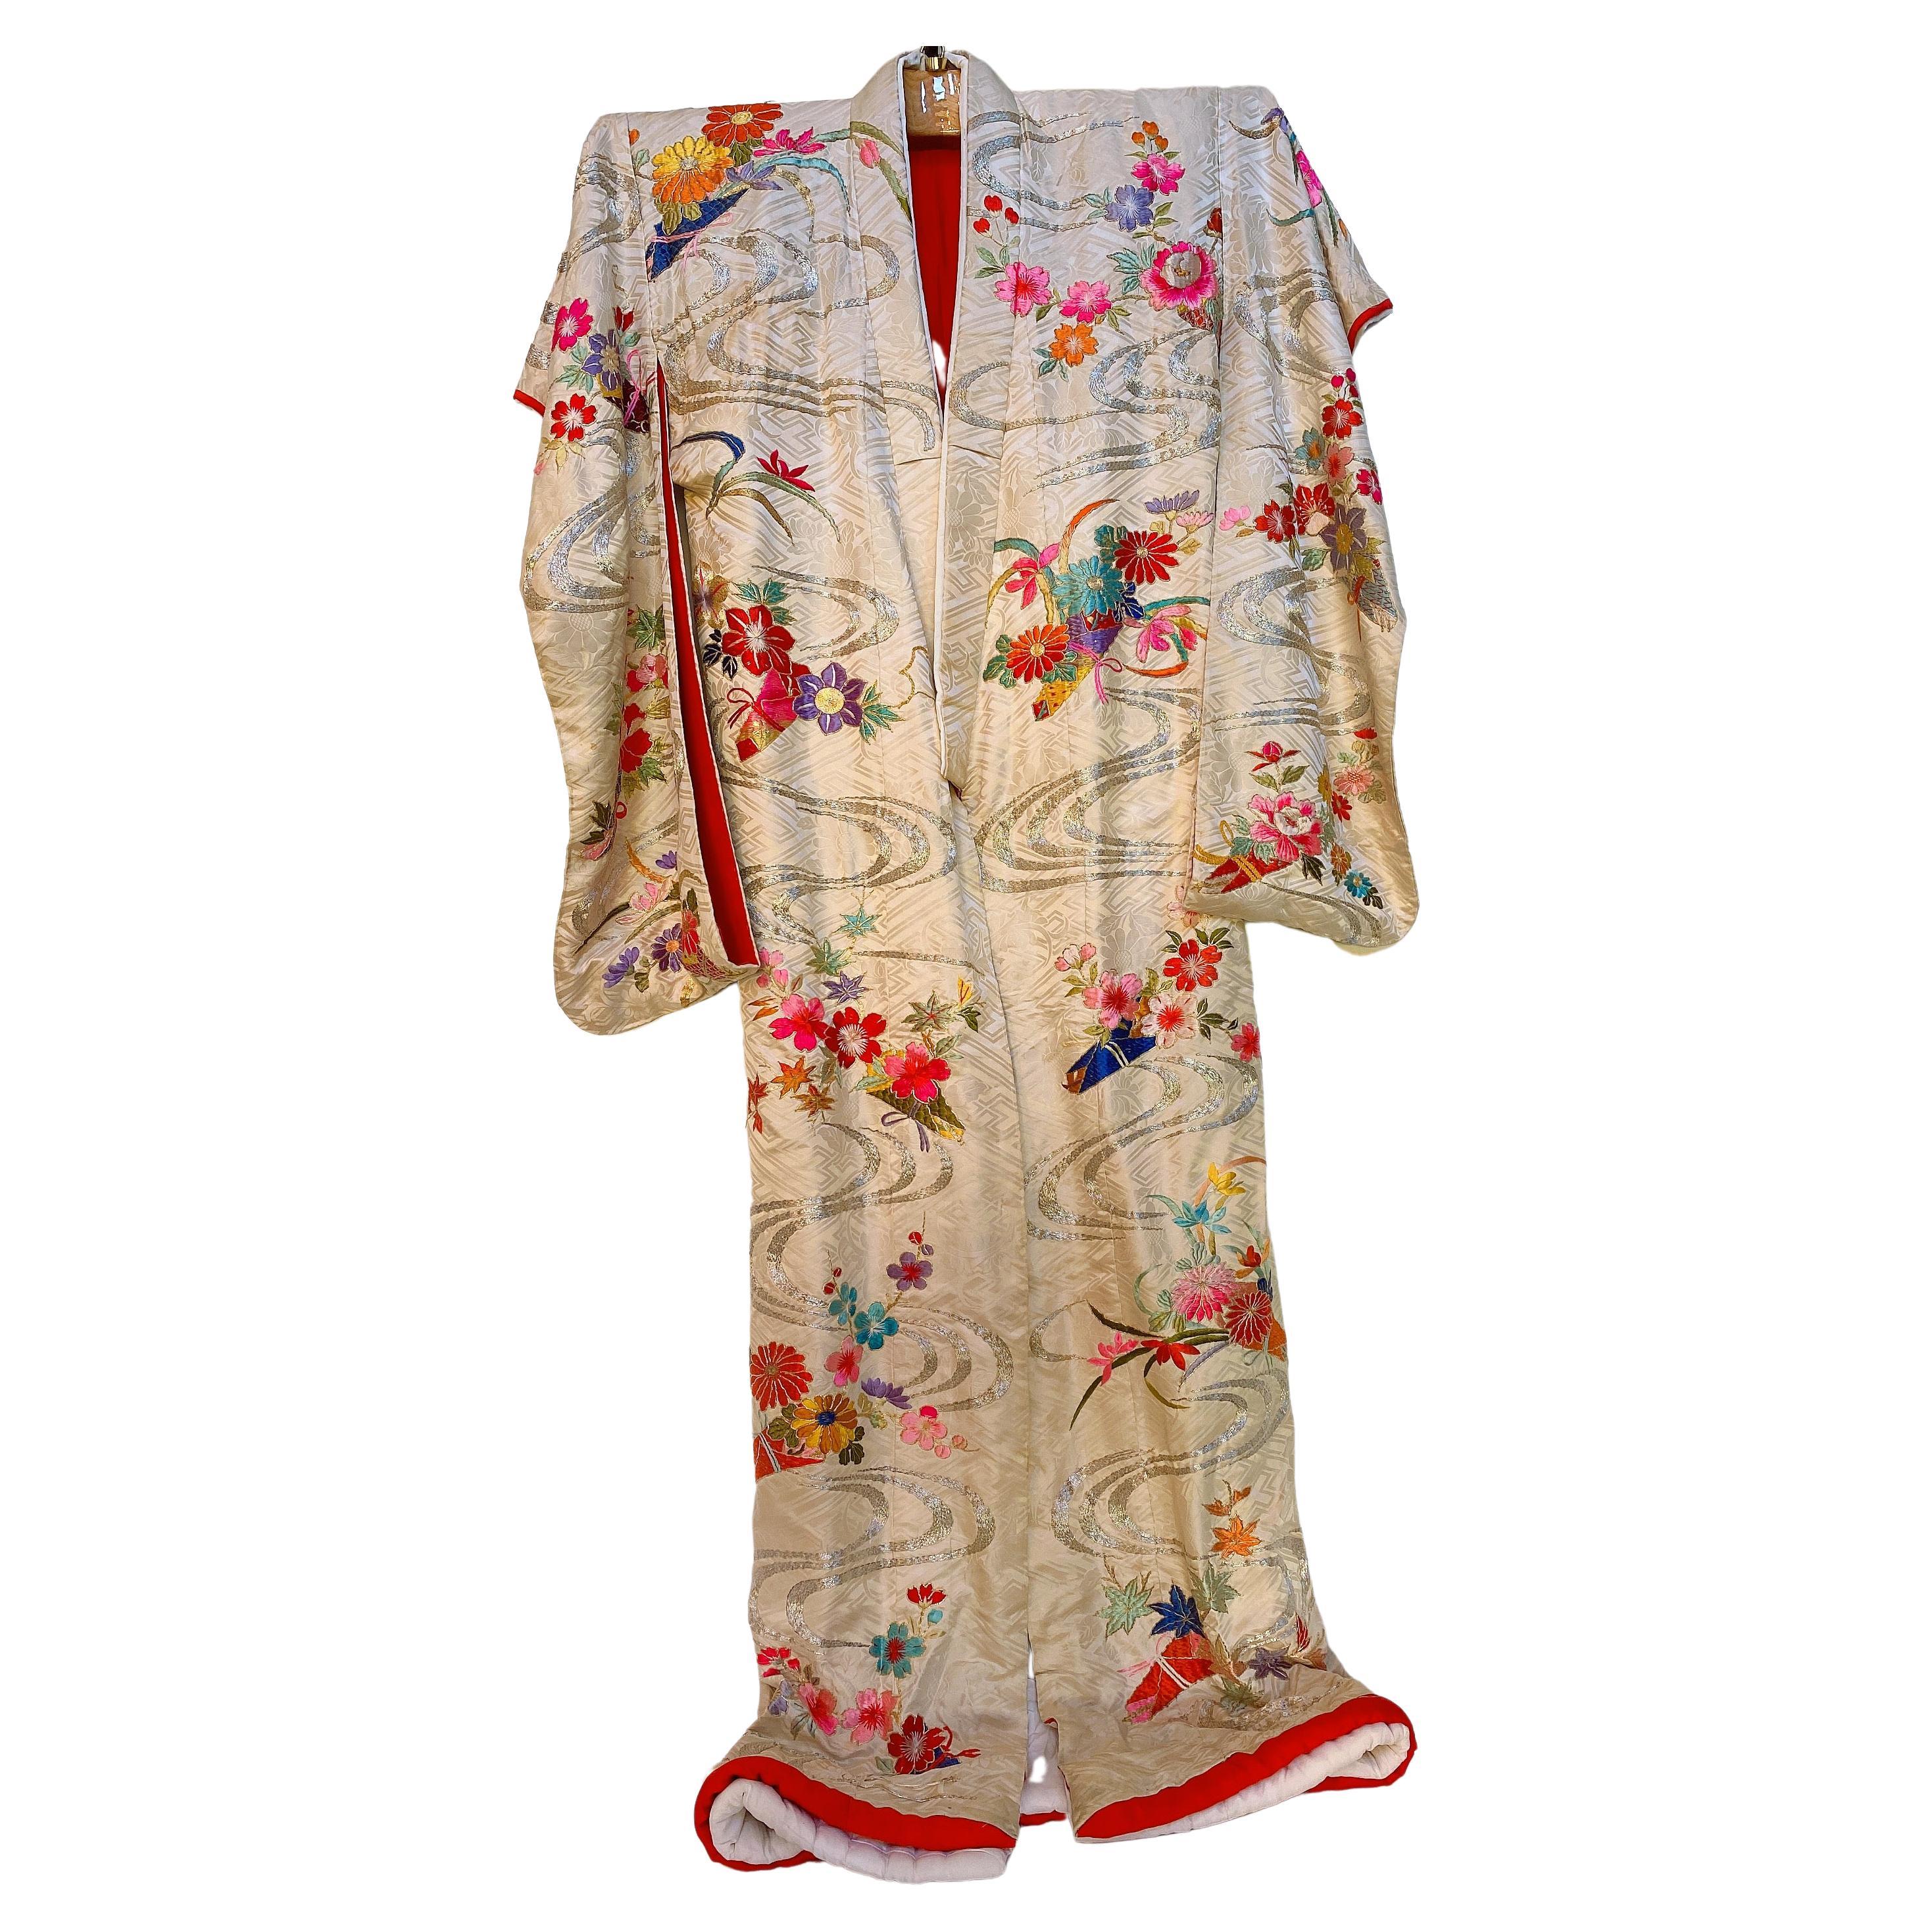 Seltener spektakulärer handbestickter japanischer Kimono aus Seide